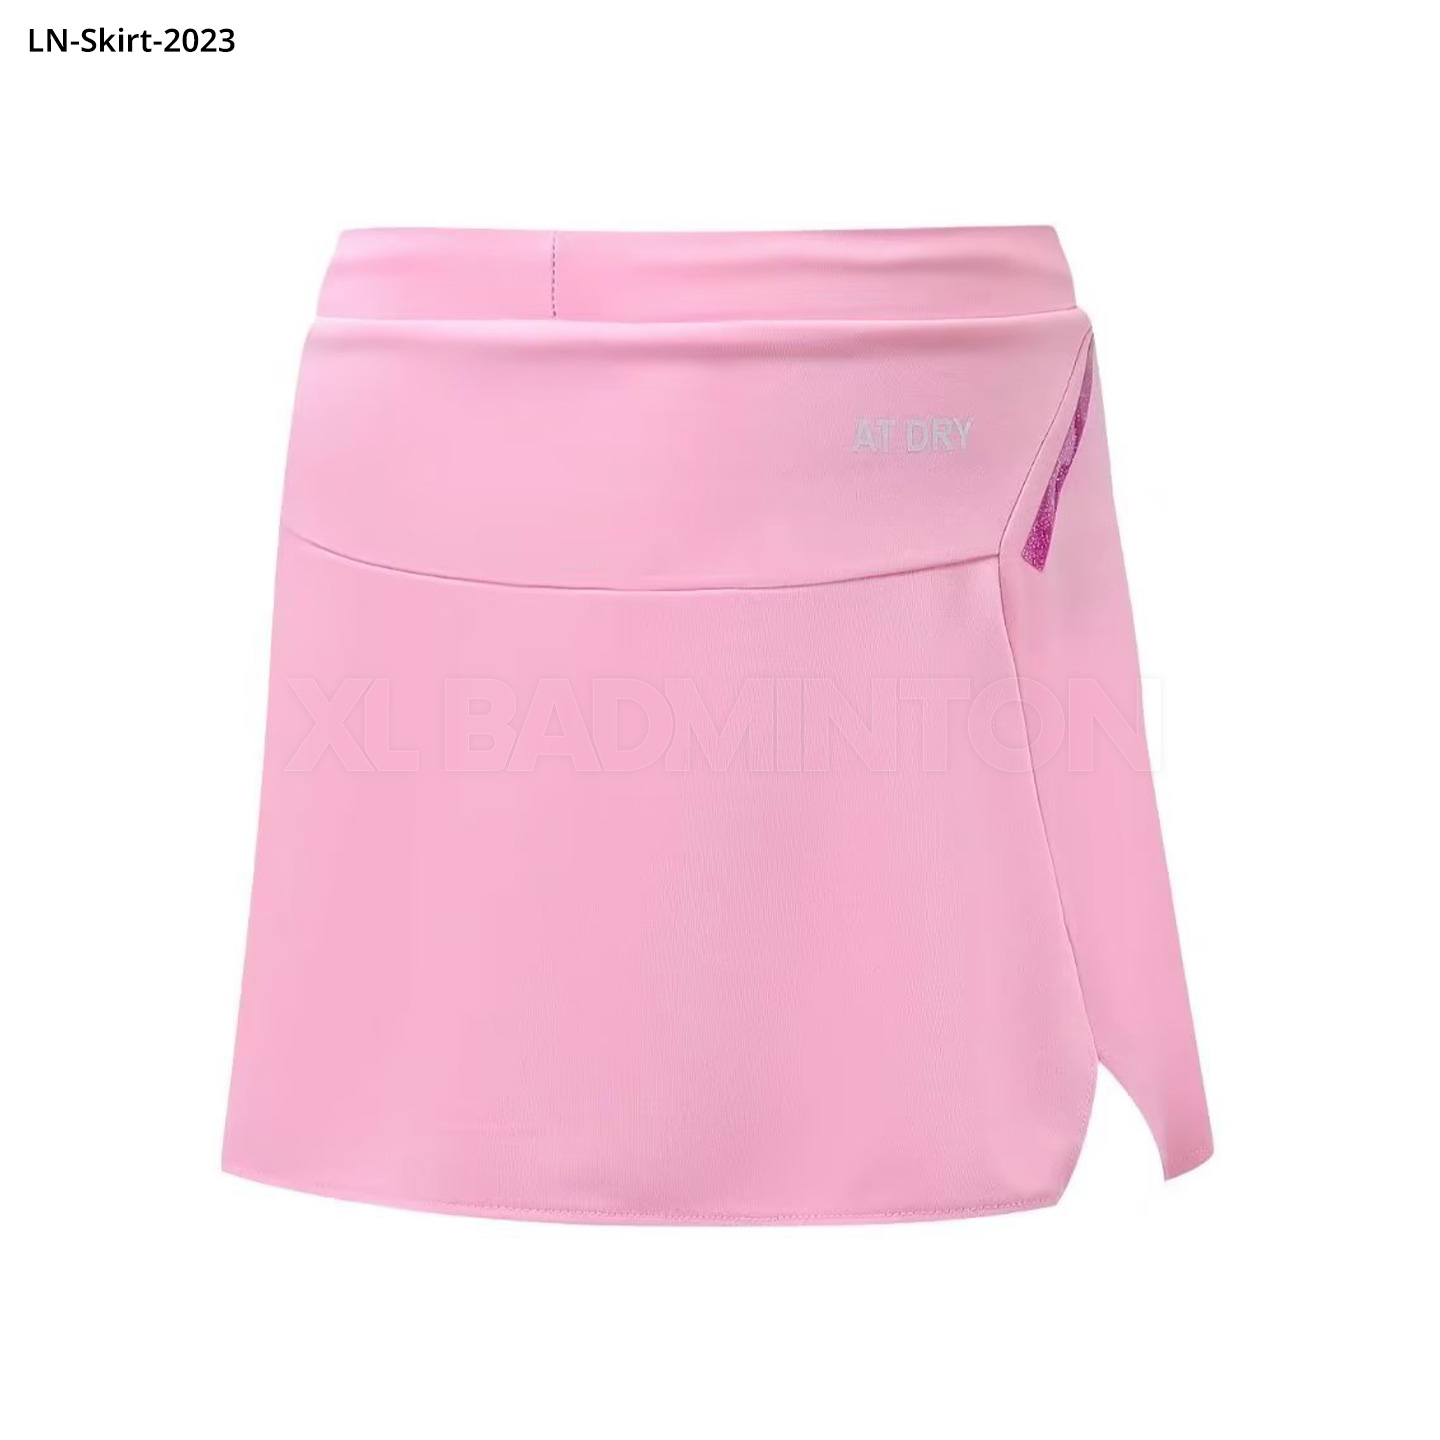 ln-skirt-2023-pink-2